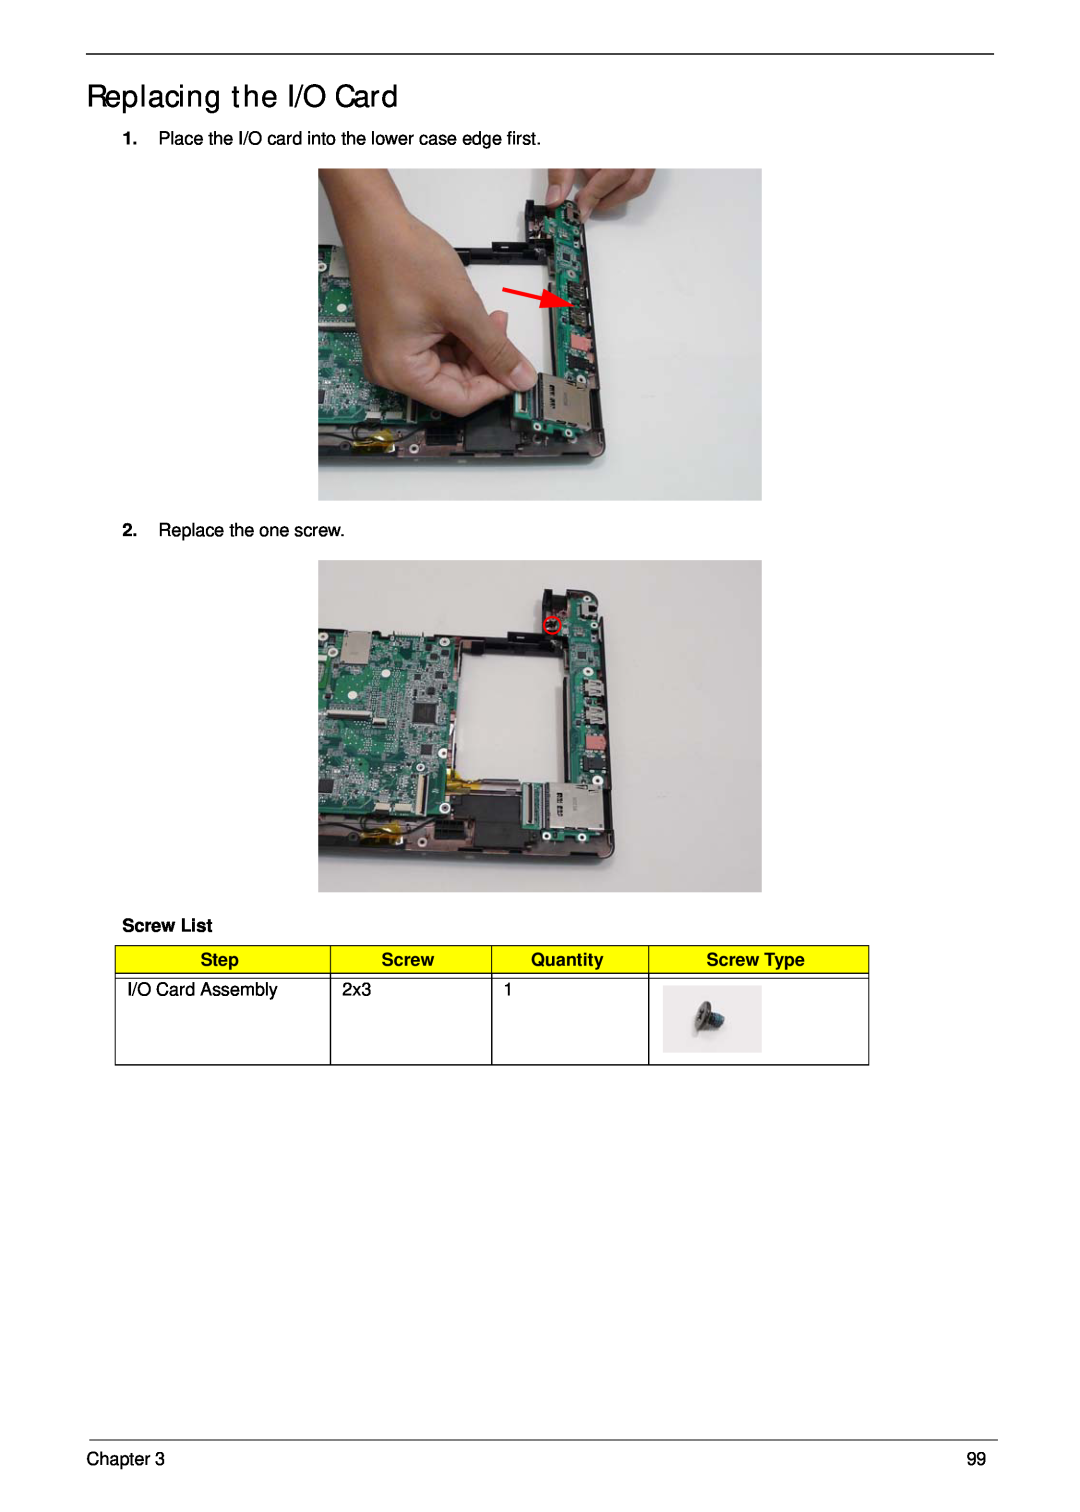 Gateway EC14 manual Replacing the I/O Card, Screw List, Step, Quantity, Screw Type, I/O Card Assembly 